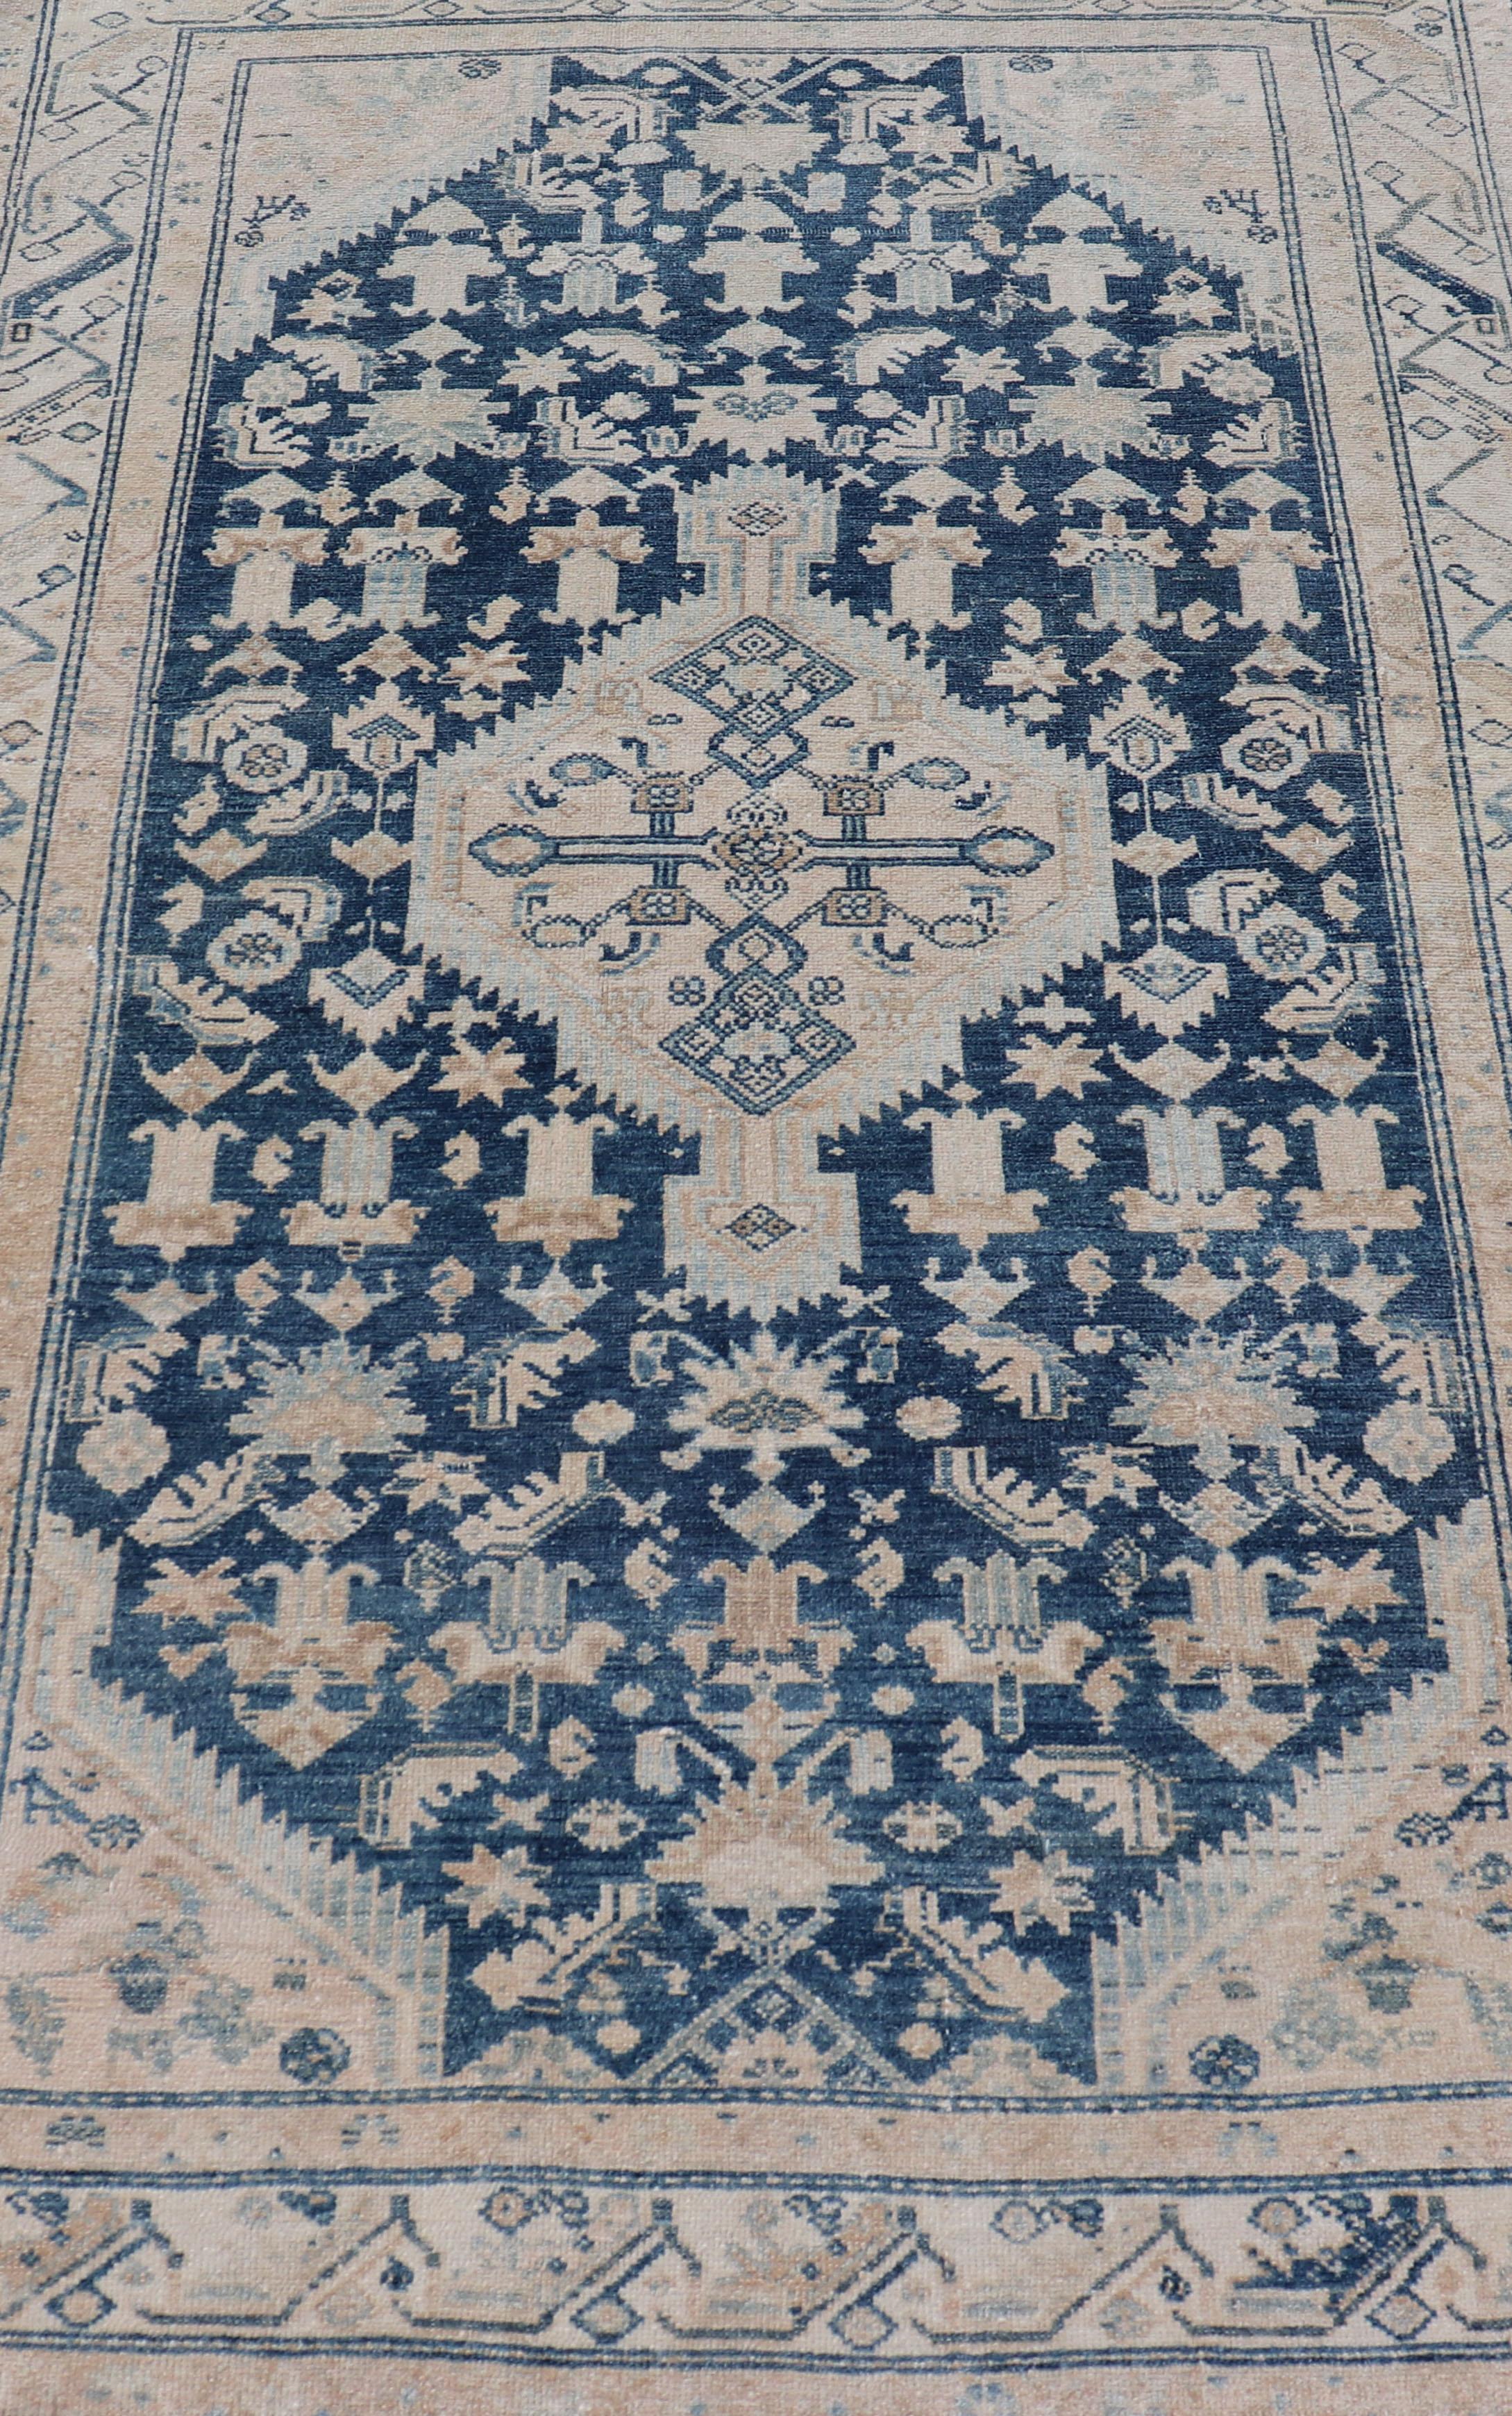 Mid night blue color rug, Blue Medallion Antique Persian Hamadan rug in dark Blue, Light Blue, and Cream. Keivan Woven Arts / rug VAS-55541, country of origin / type: Iran / Hamadan, circa 1920.

Measures: 4'5 x 6'11 

This Persian antique